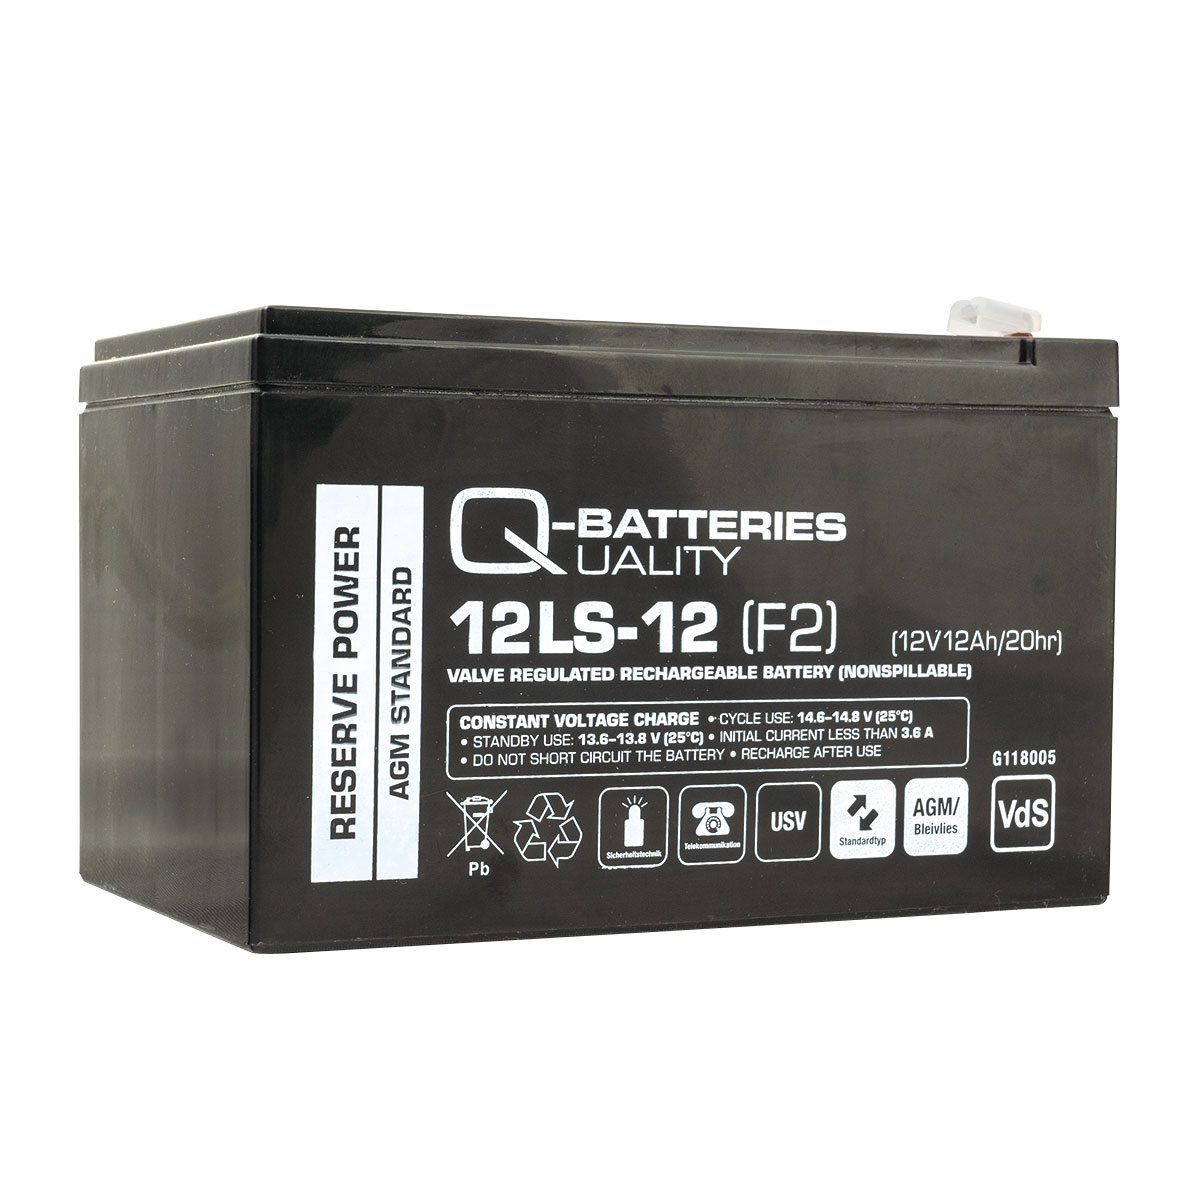 Q-Batteries 12LS-12 F2 12V 12Ah Blei-Vlies-Akku / AGM VRLA mit VdS